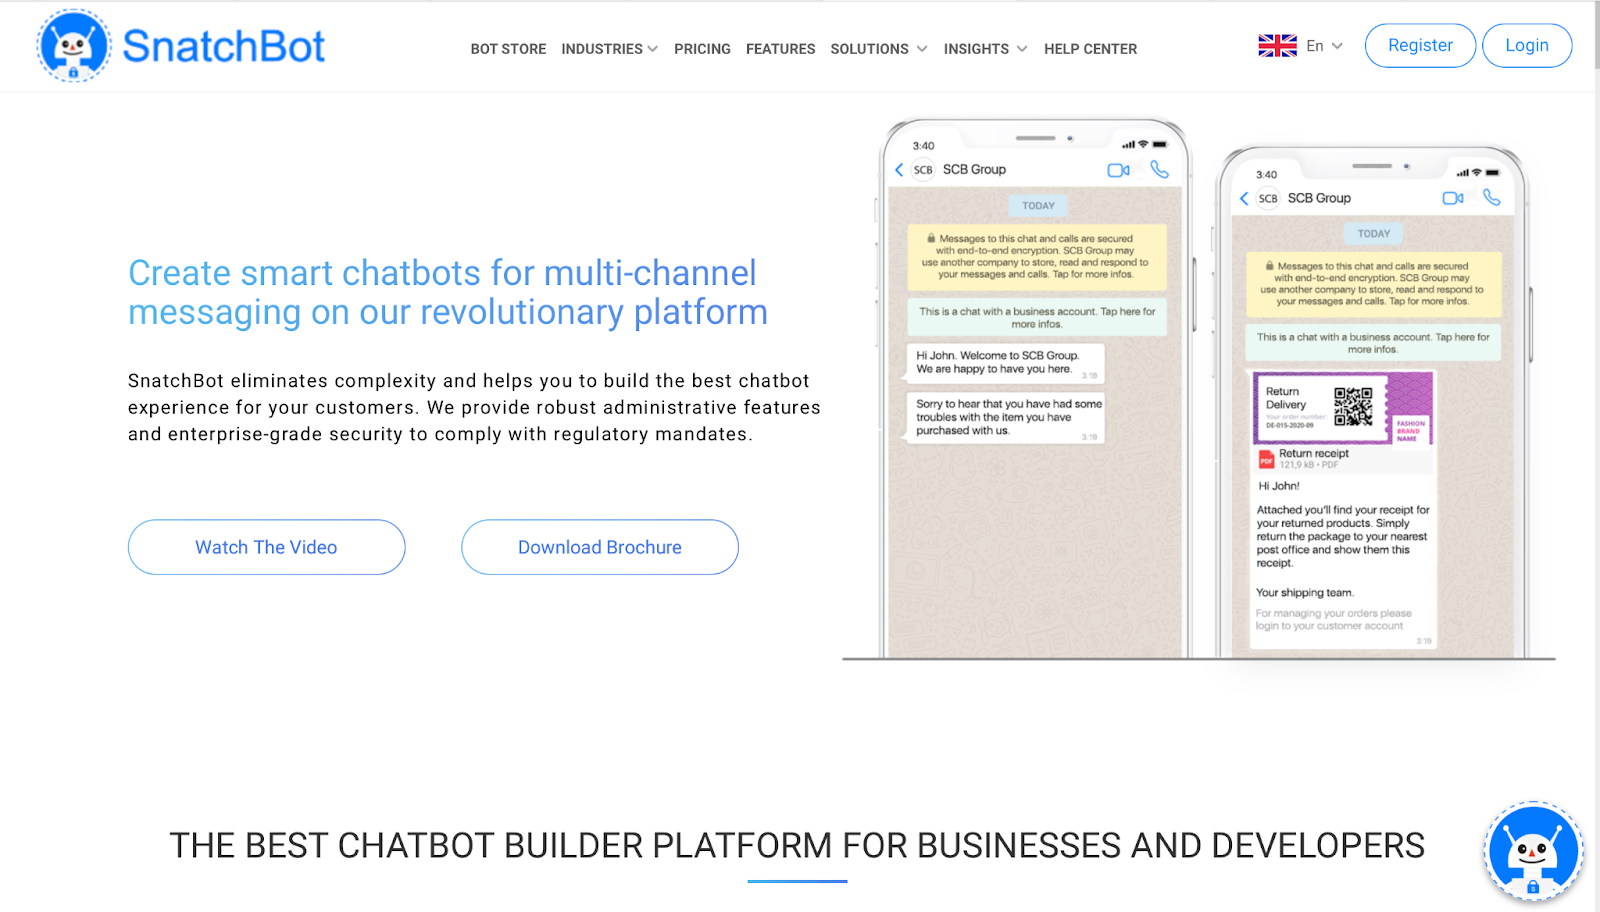 chatbot tools: snatchbot